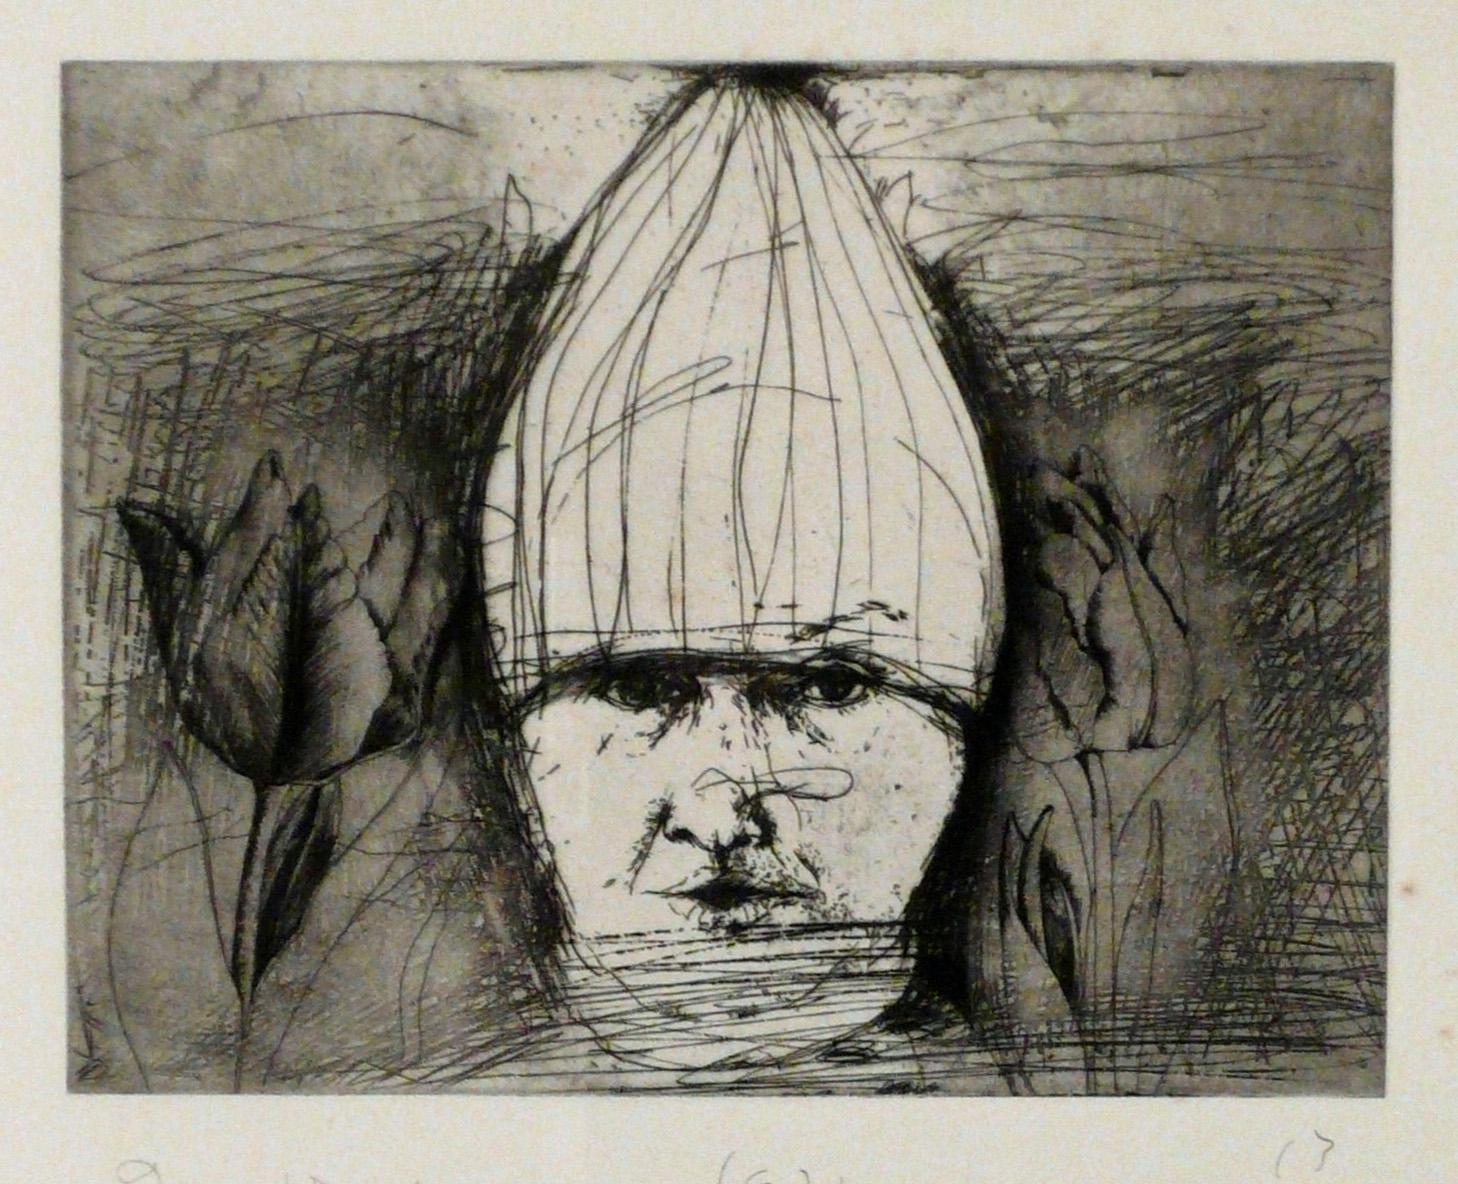 SELF-PORTRAIT IN A SKI HAT - Print by Jim Dine